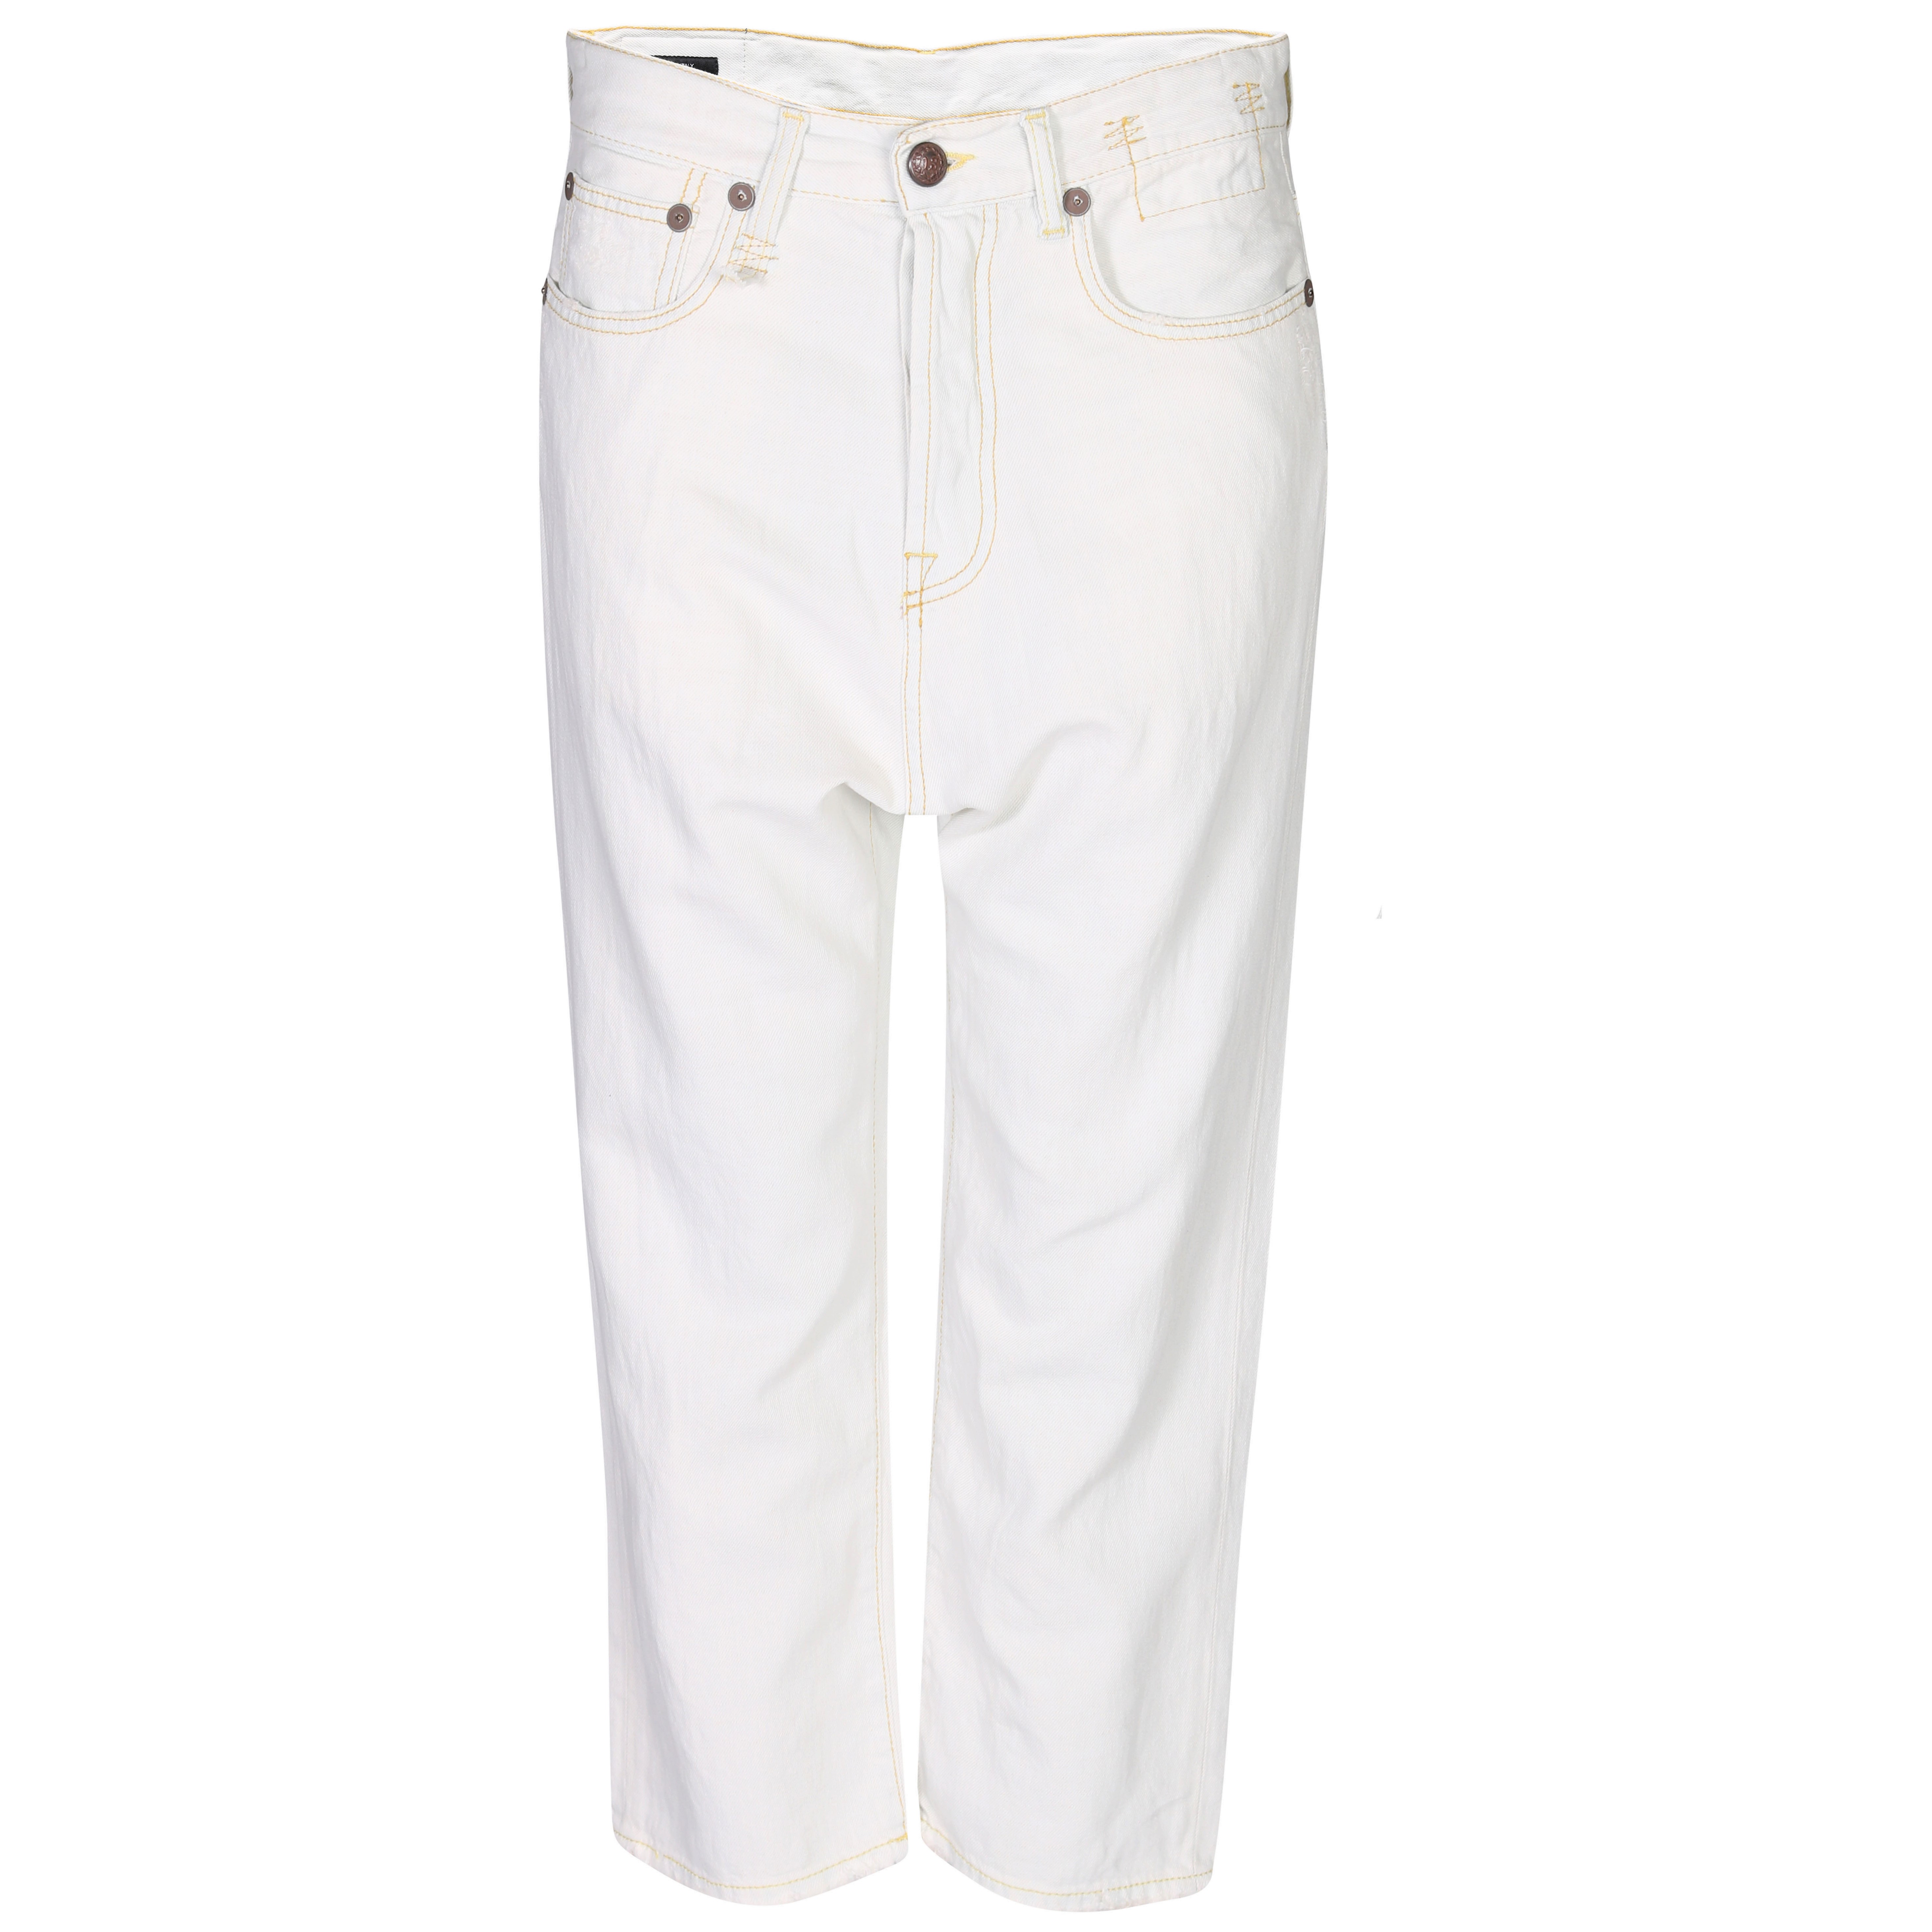 R13 Tailored Drop Jeans in Kinney Linen Indigo